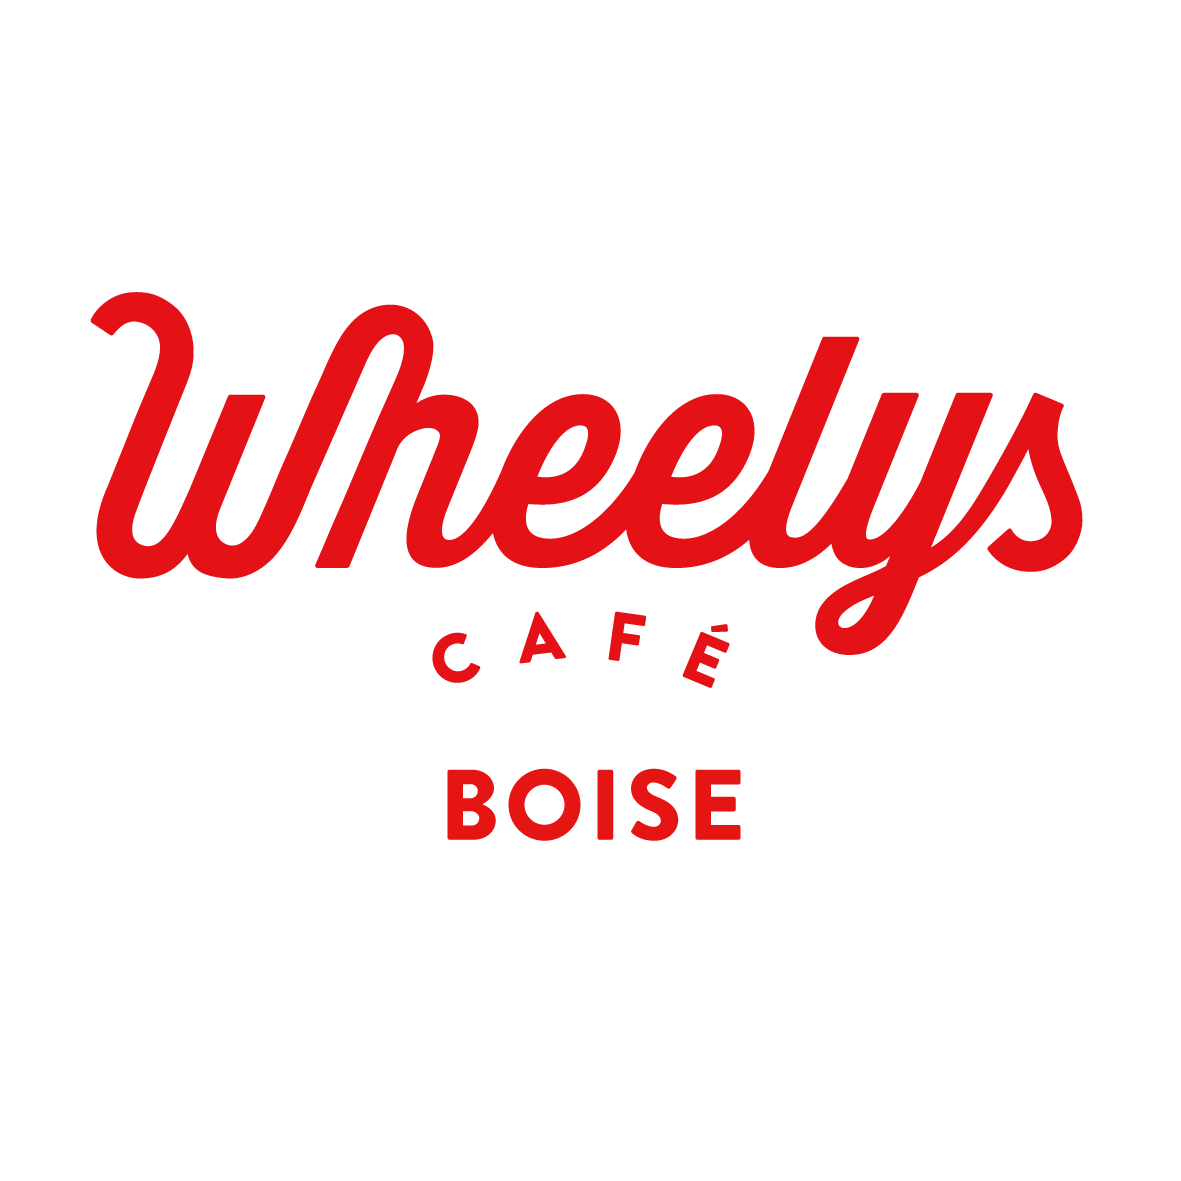 Wheelys Boise 0